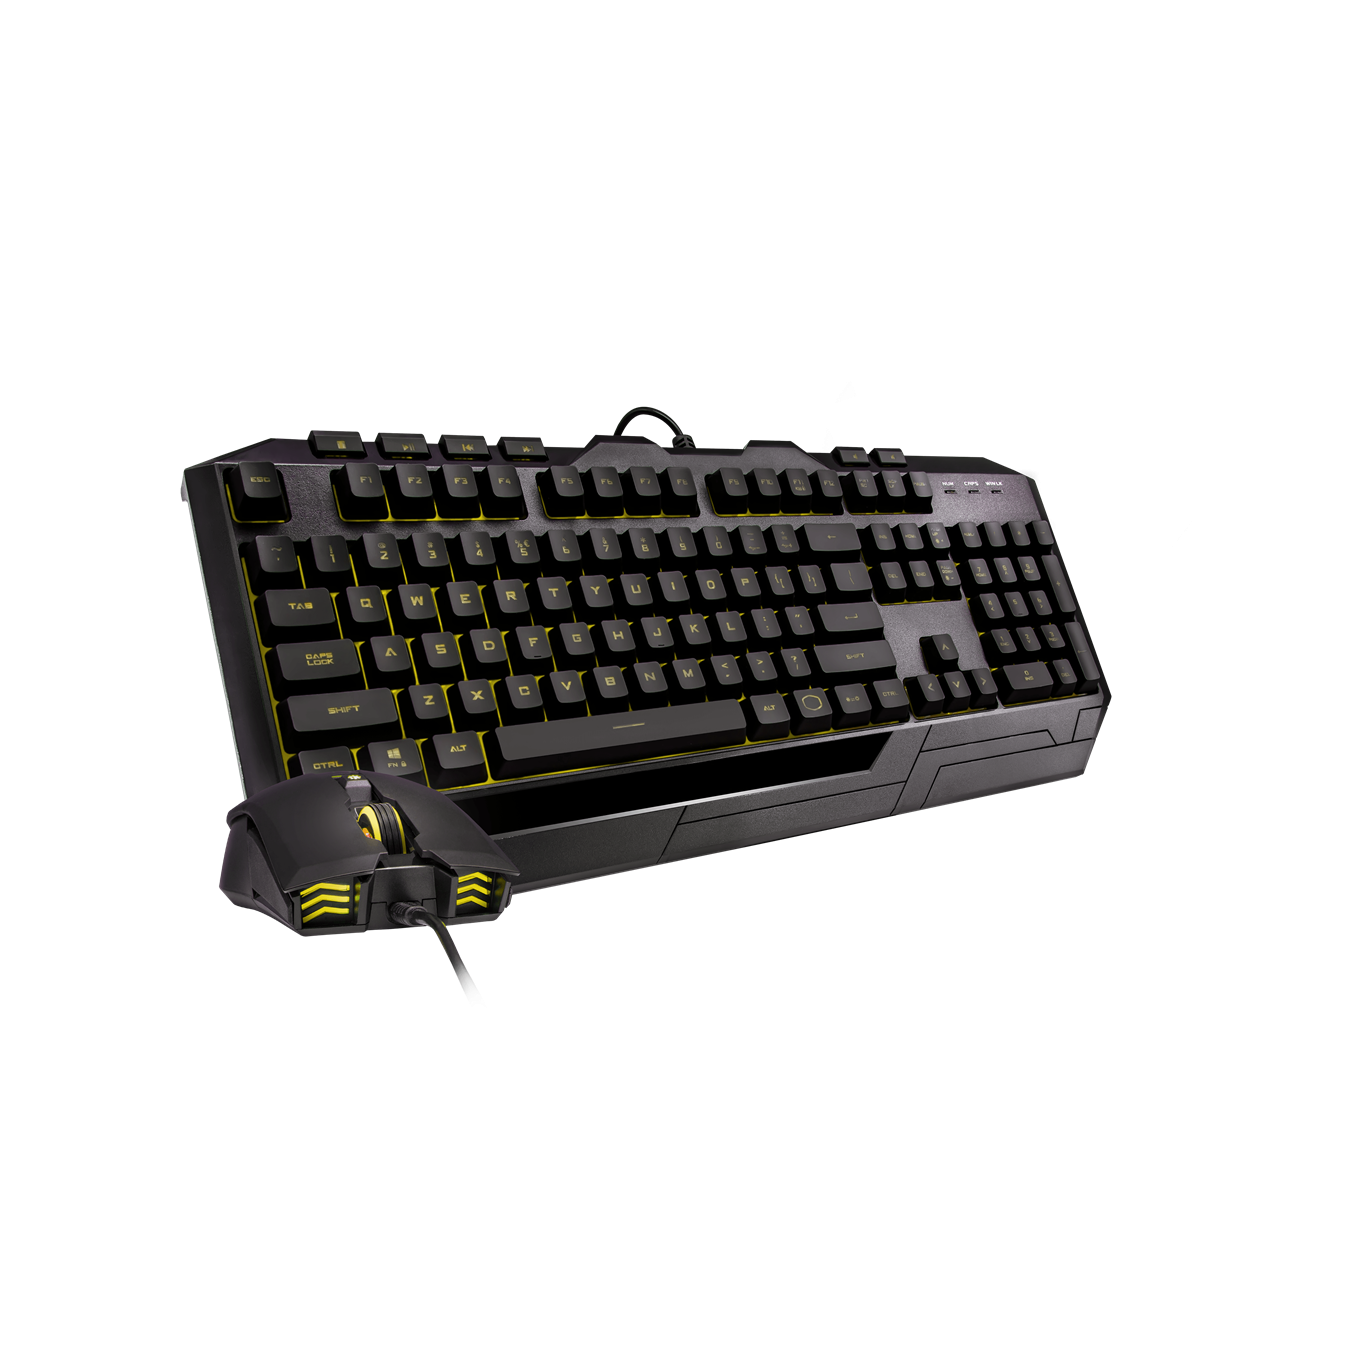 Devastator 3 Plus - keyboard with yellow backlight